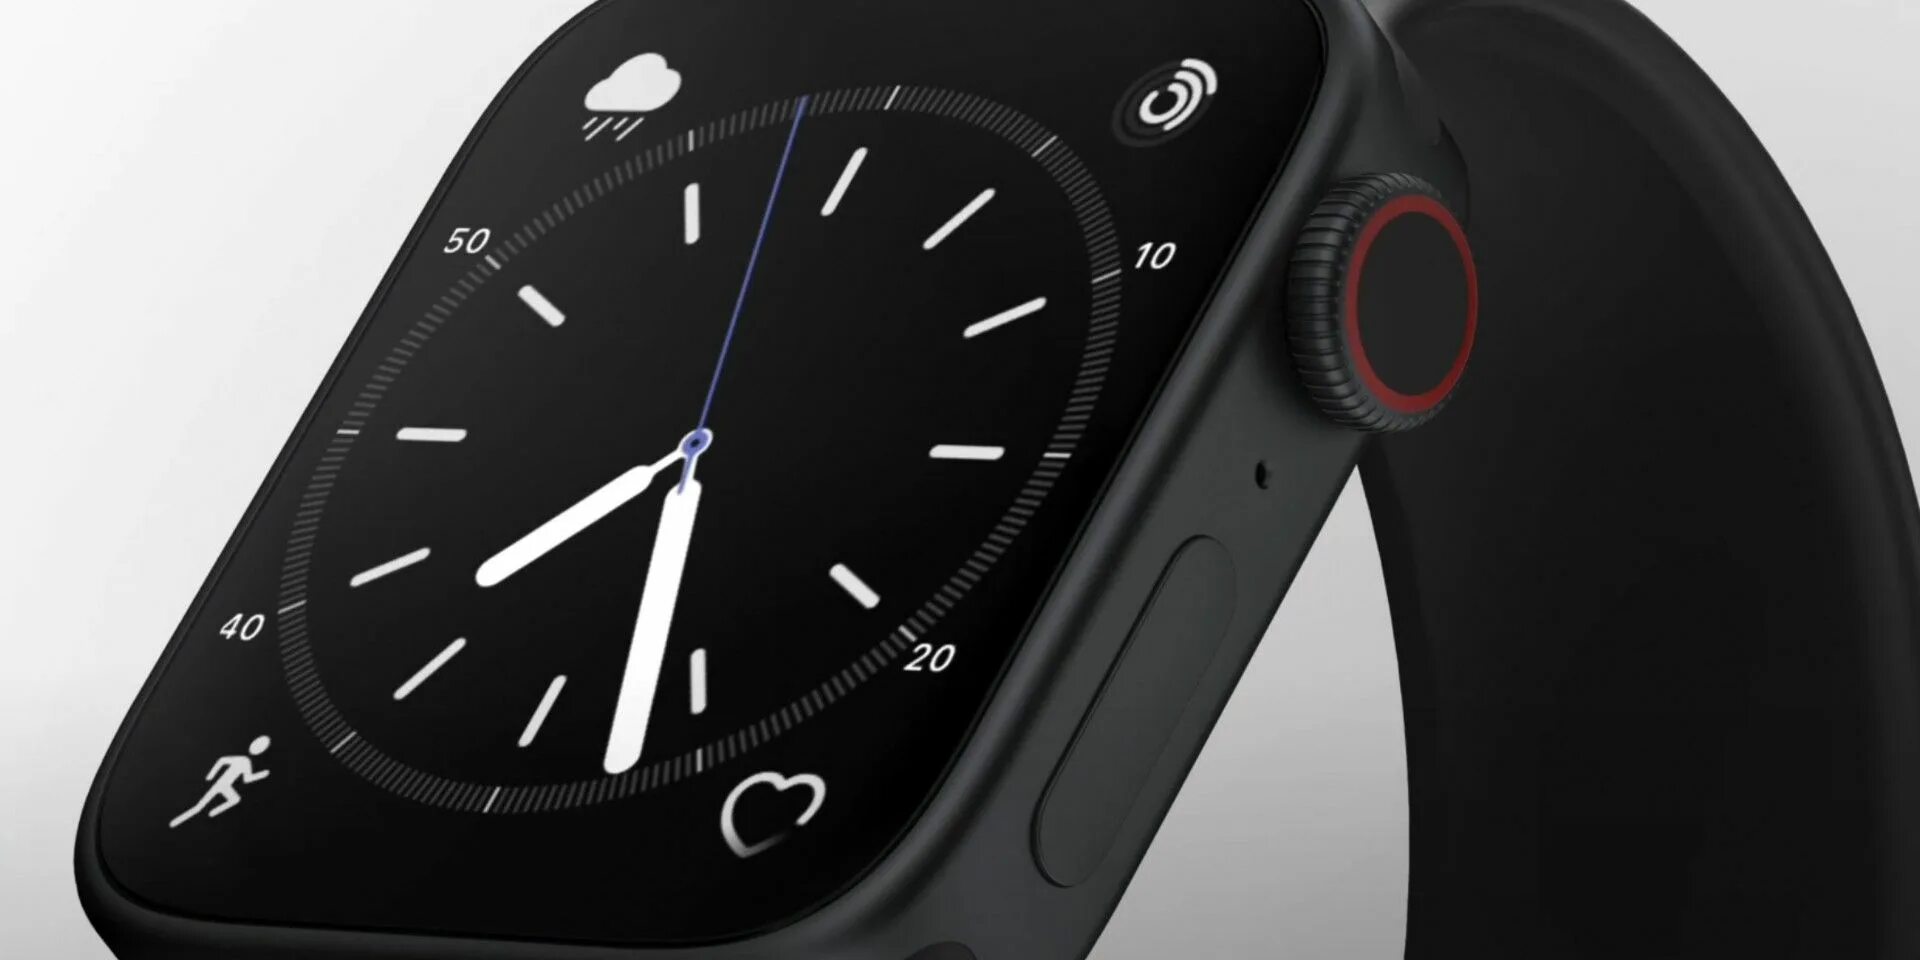 Apple watch 8. Часы эпл вотч 8. IWATCH 8 Ultra.